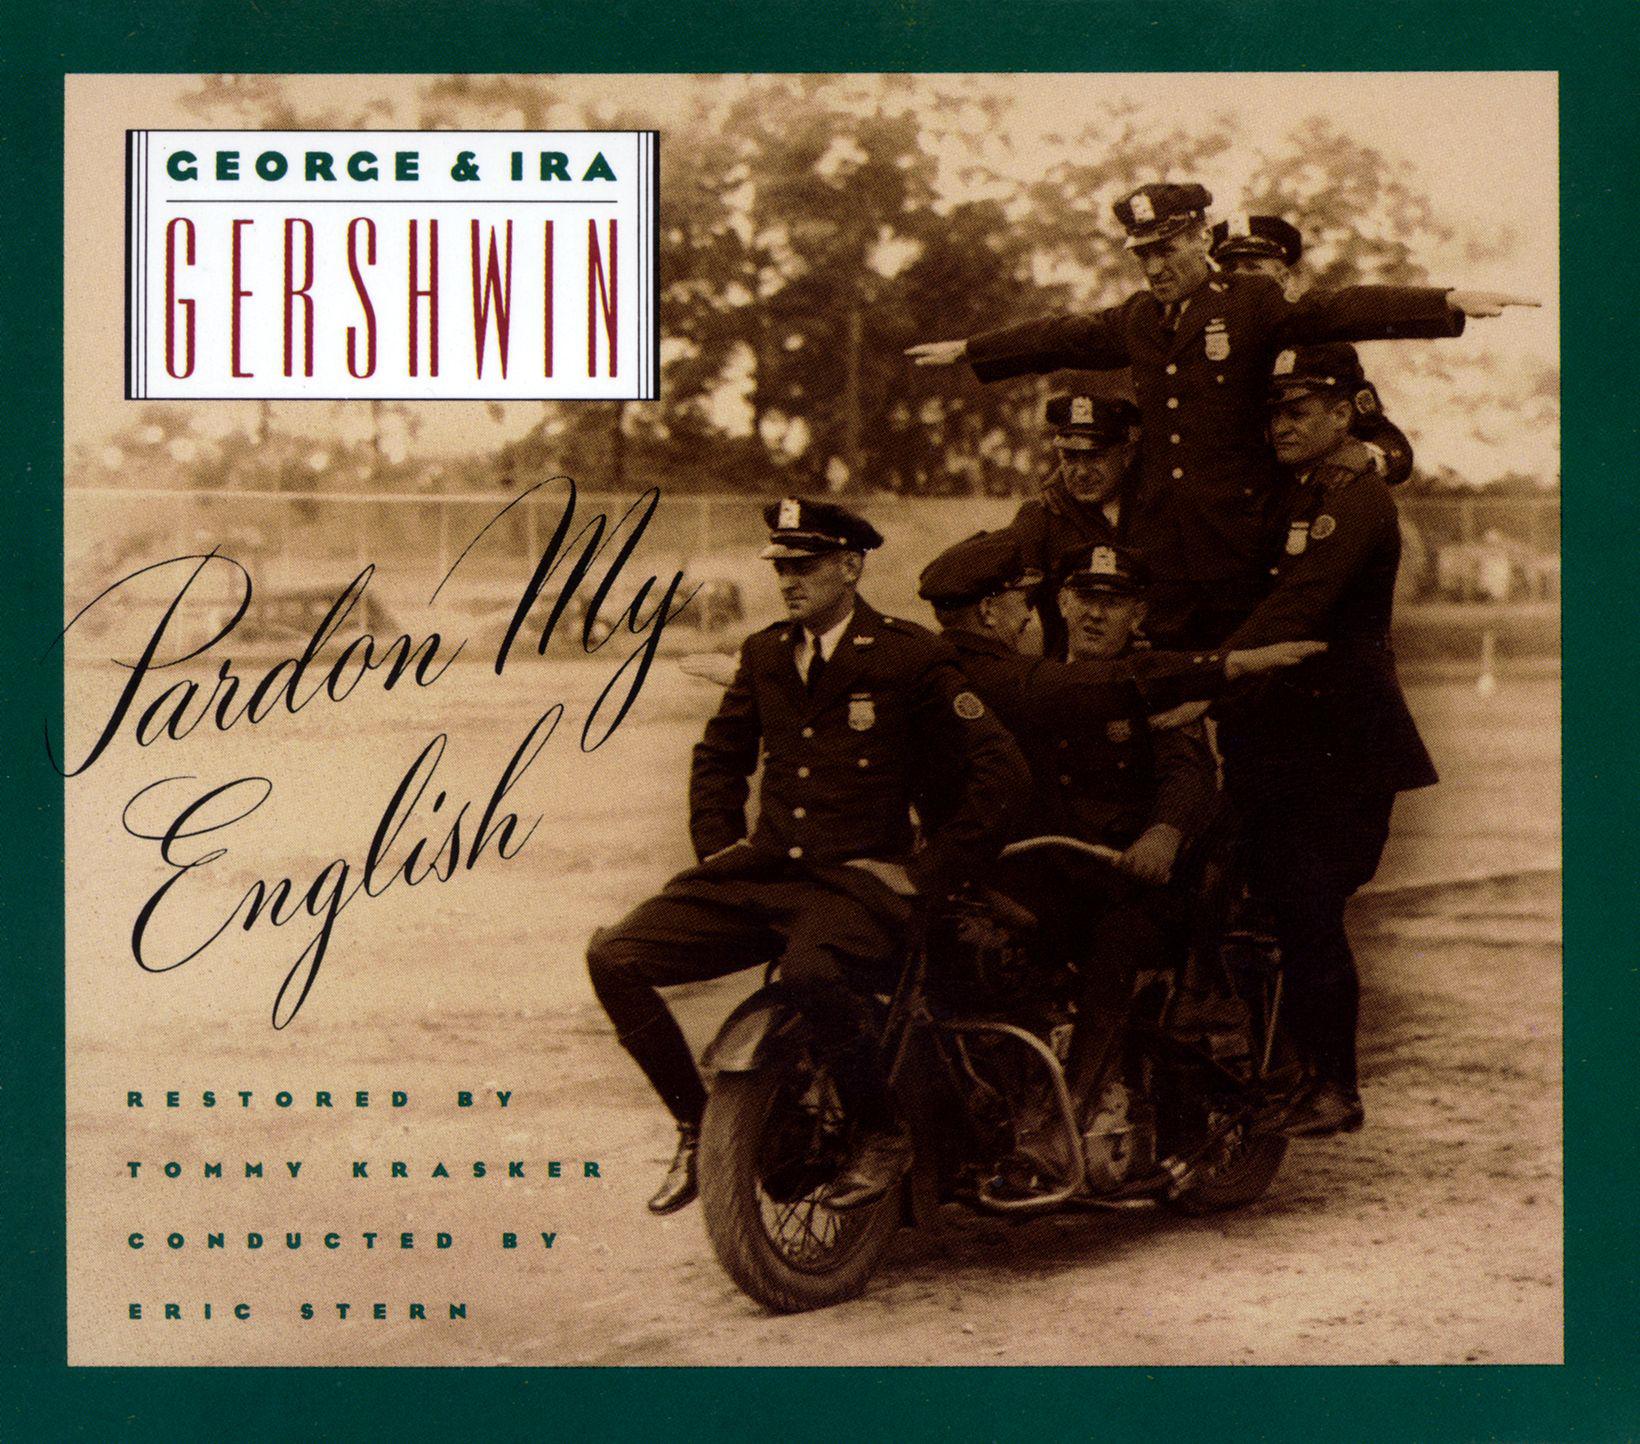 George & Ira Gershwin: Pardon My English